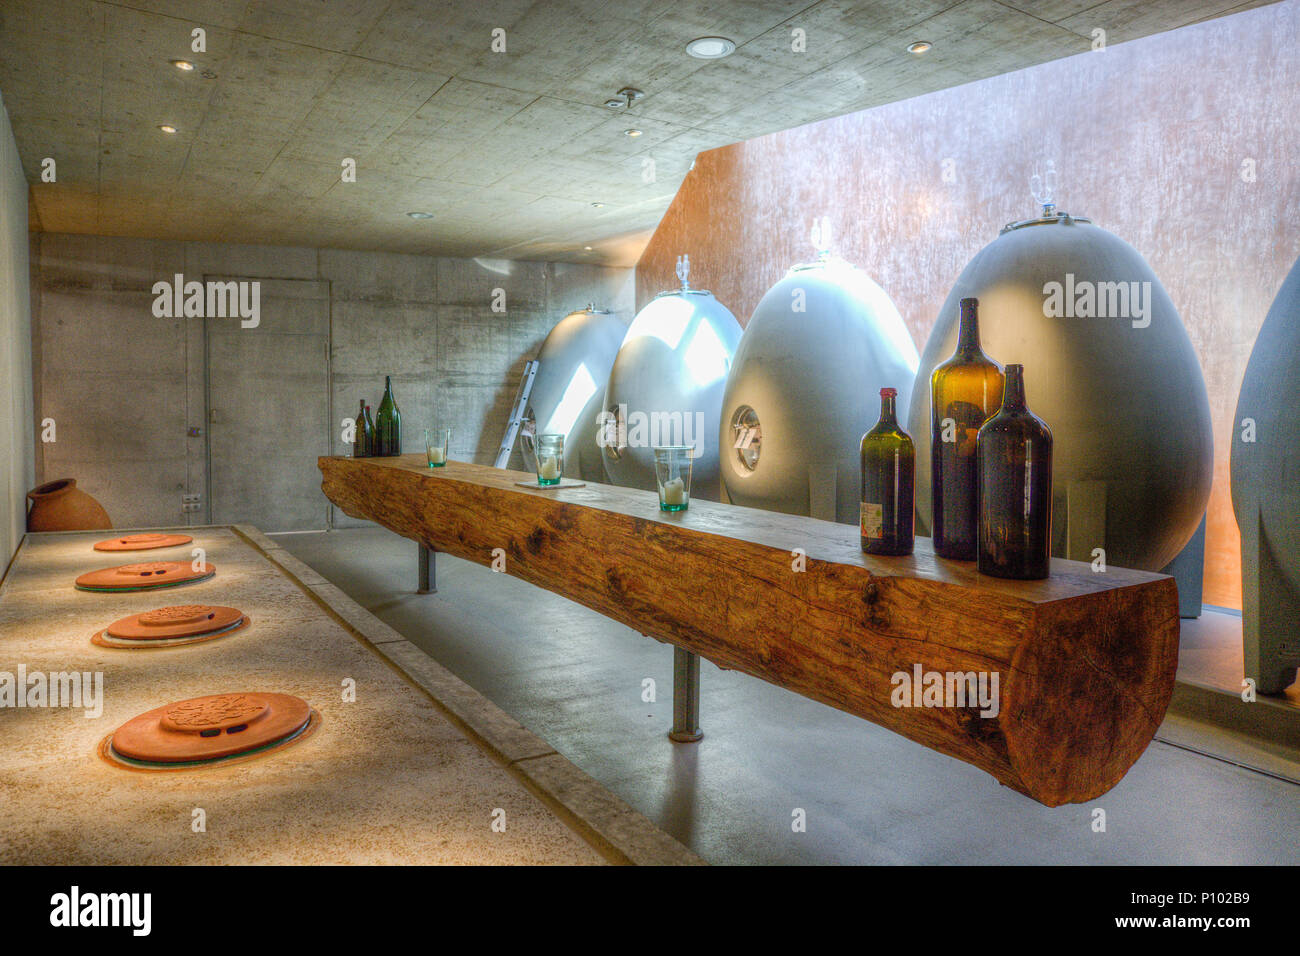 fermentation cellar with congrete eggs, Weingut am Stein, Würzburg, Germany Stock Photo